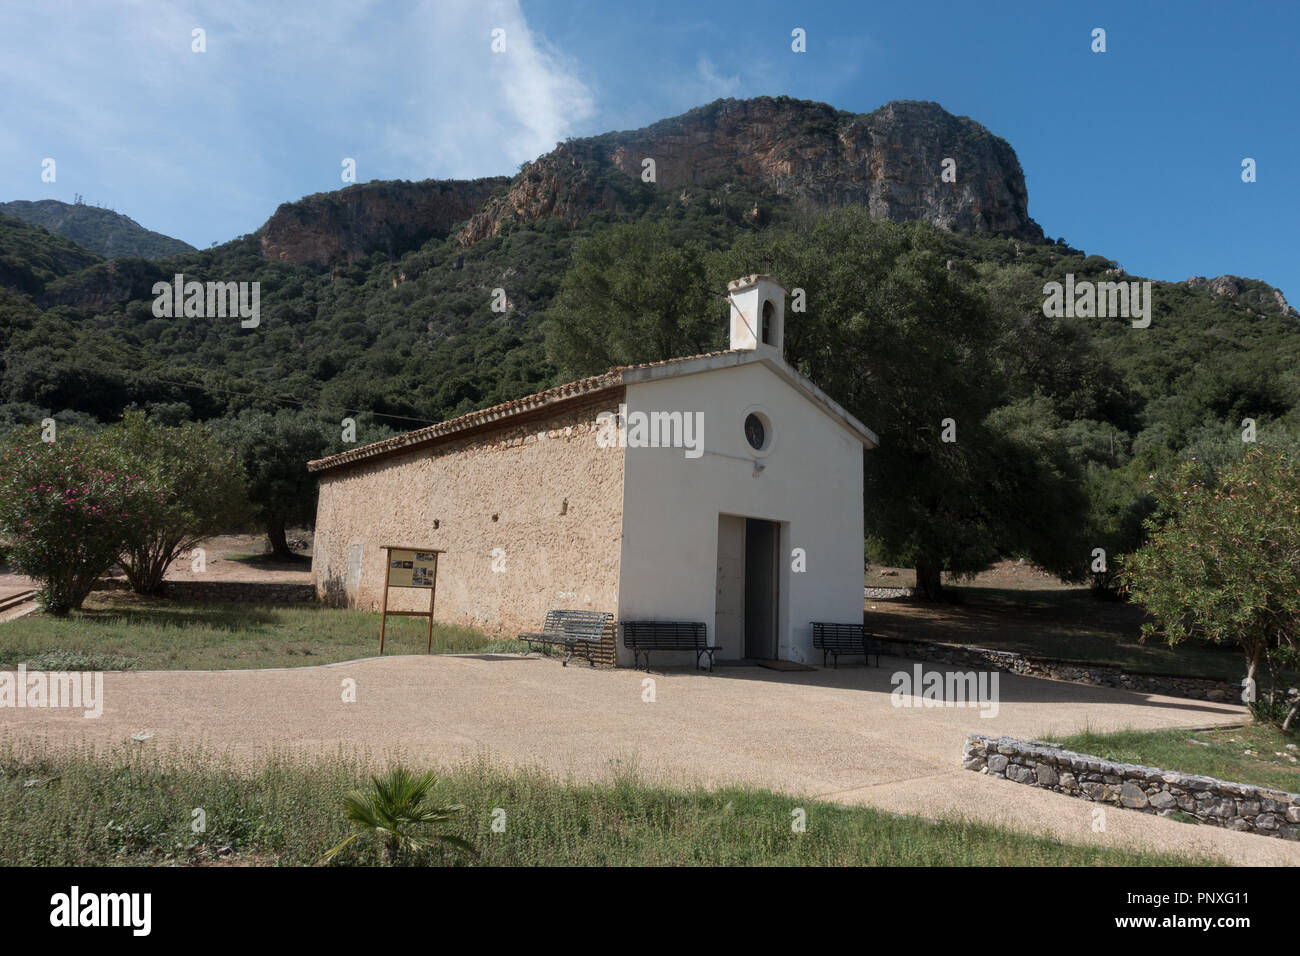 Church of San giovanni, near entrance to cave. Sardinia. Italy Stock Photo